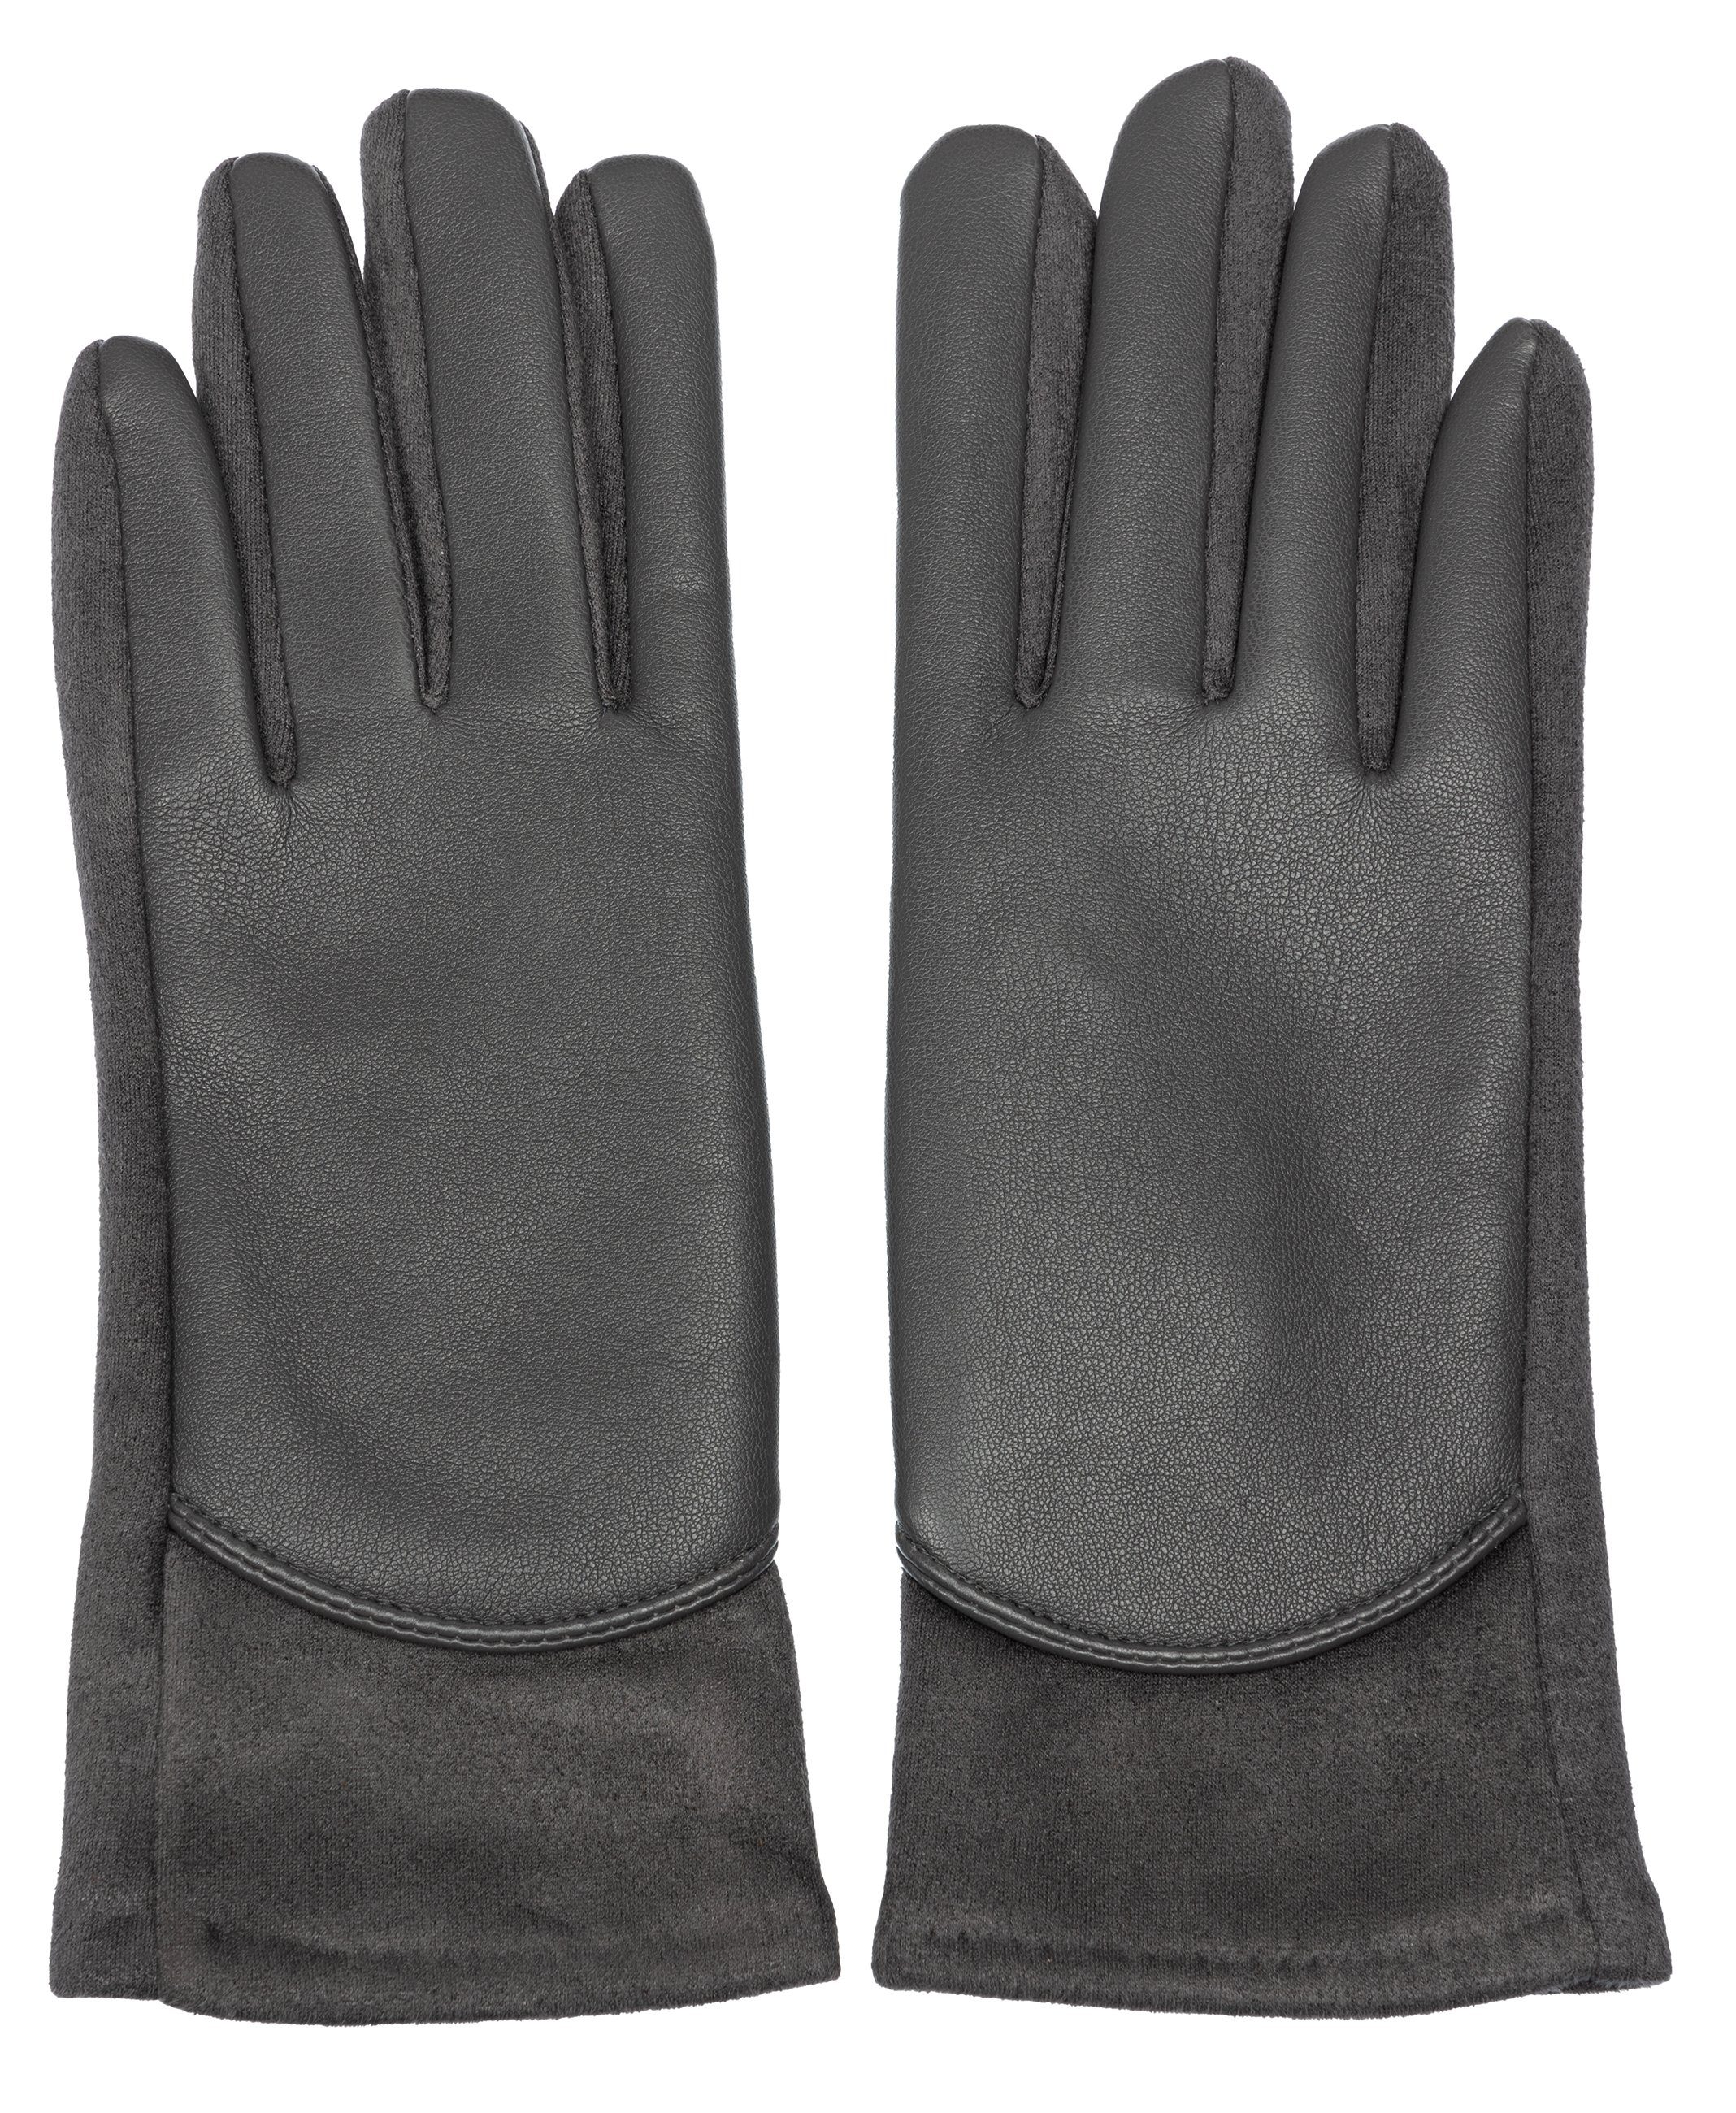 Handschuhe elegante GLV016 dunkelgrau Damen Caspar uni Strickhandschuhe klassisch